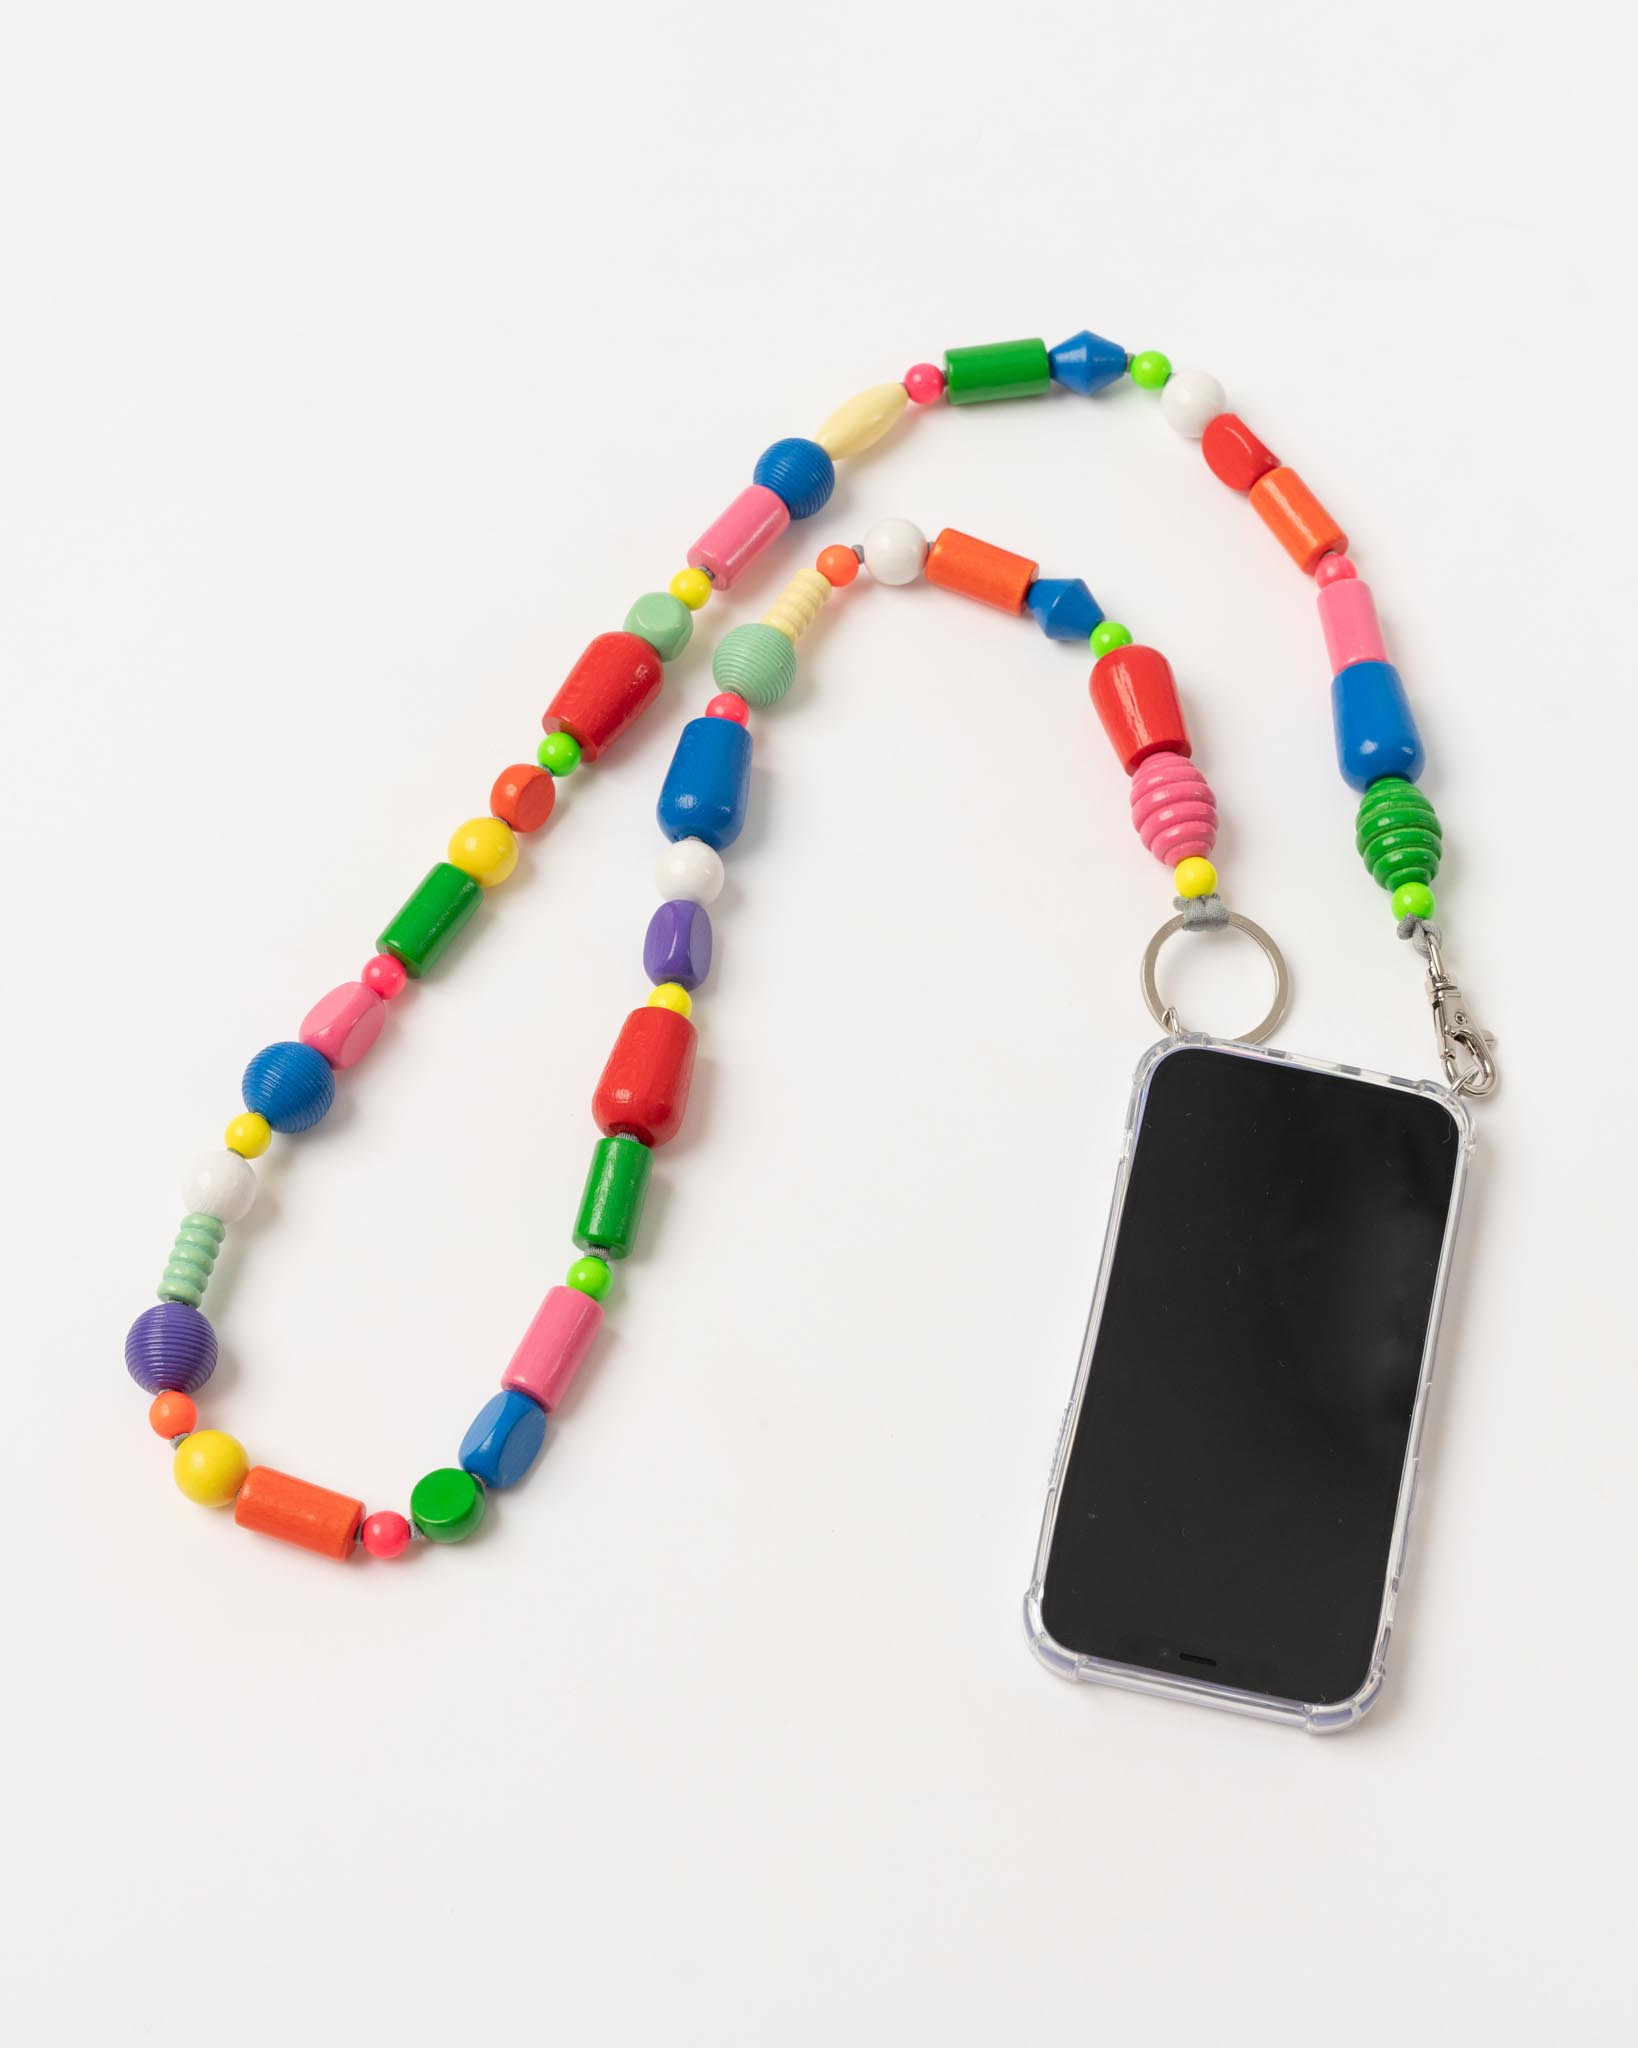 Weslash Ina Seifart Bunter Mix Phone Necklace shopify test